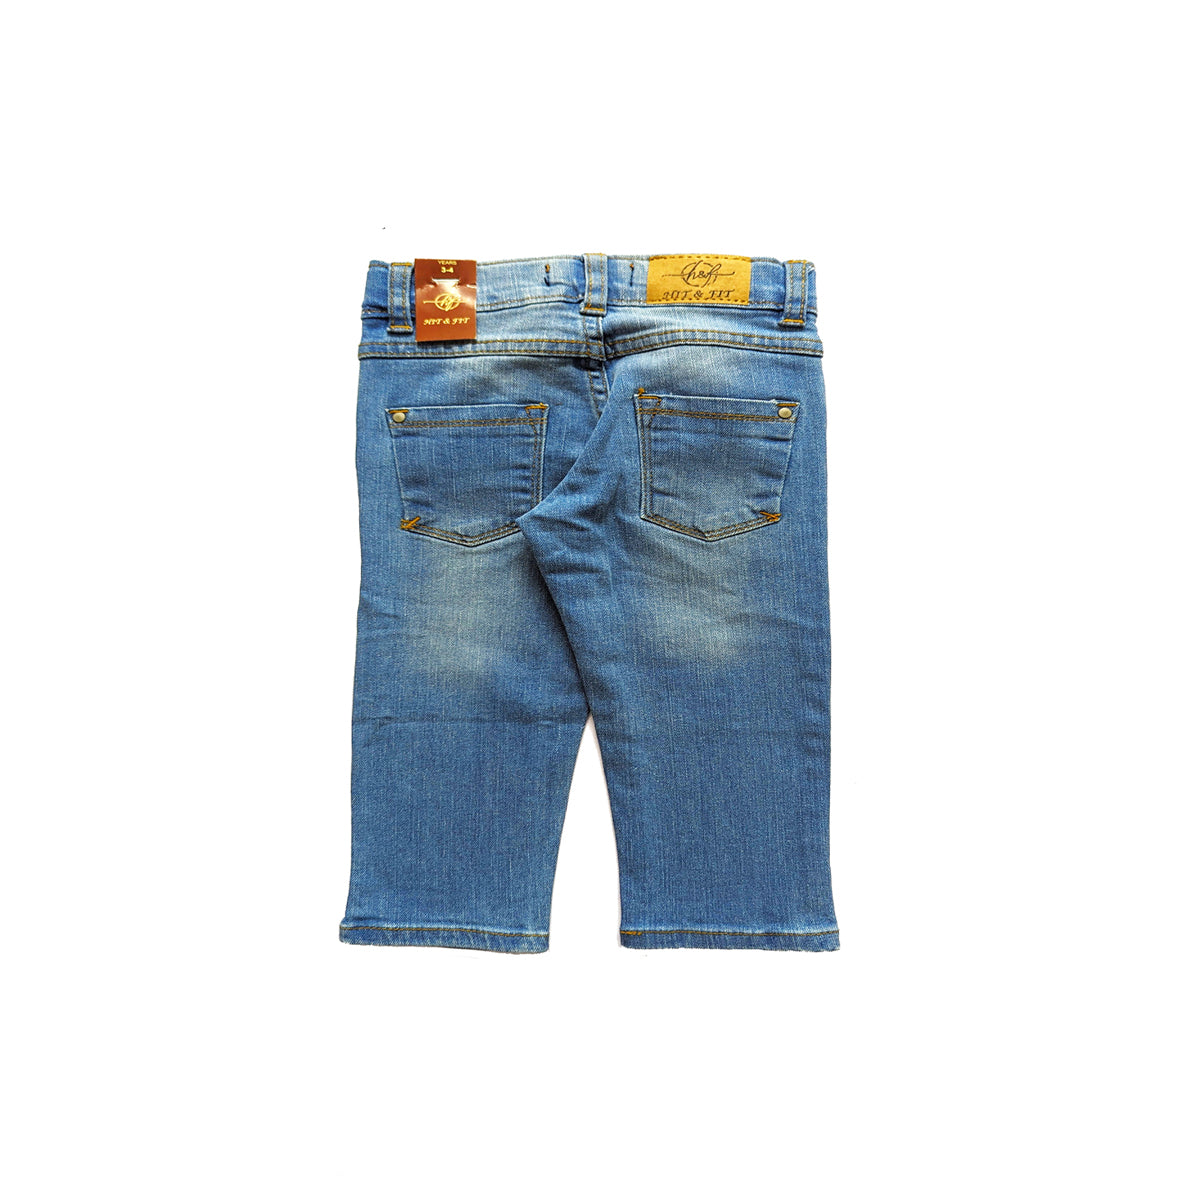 Brand Expo Premium Quality Branded Denim Jeans for Boy's